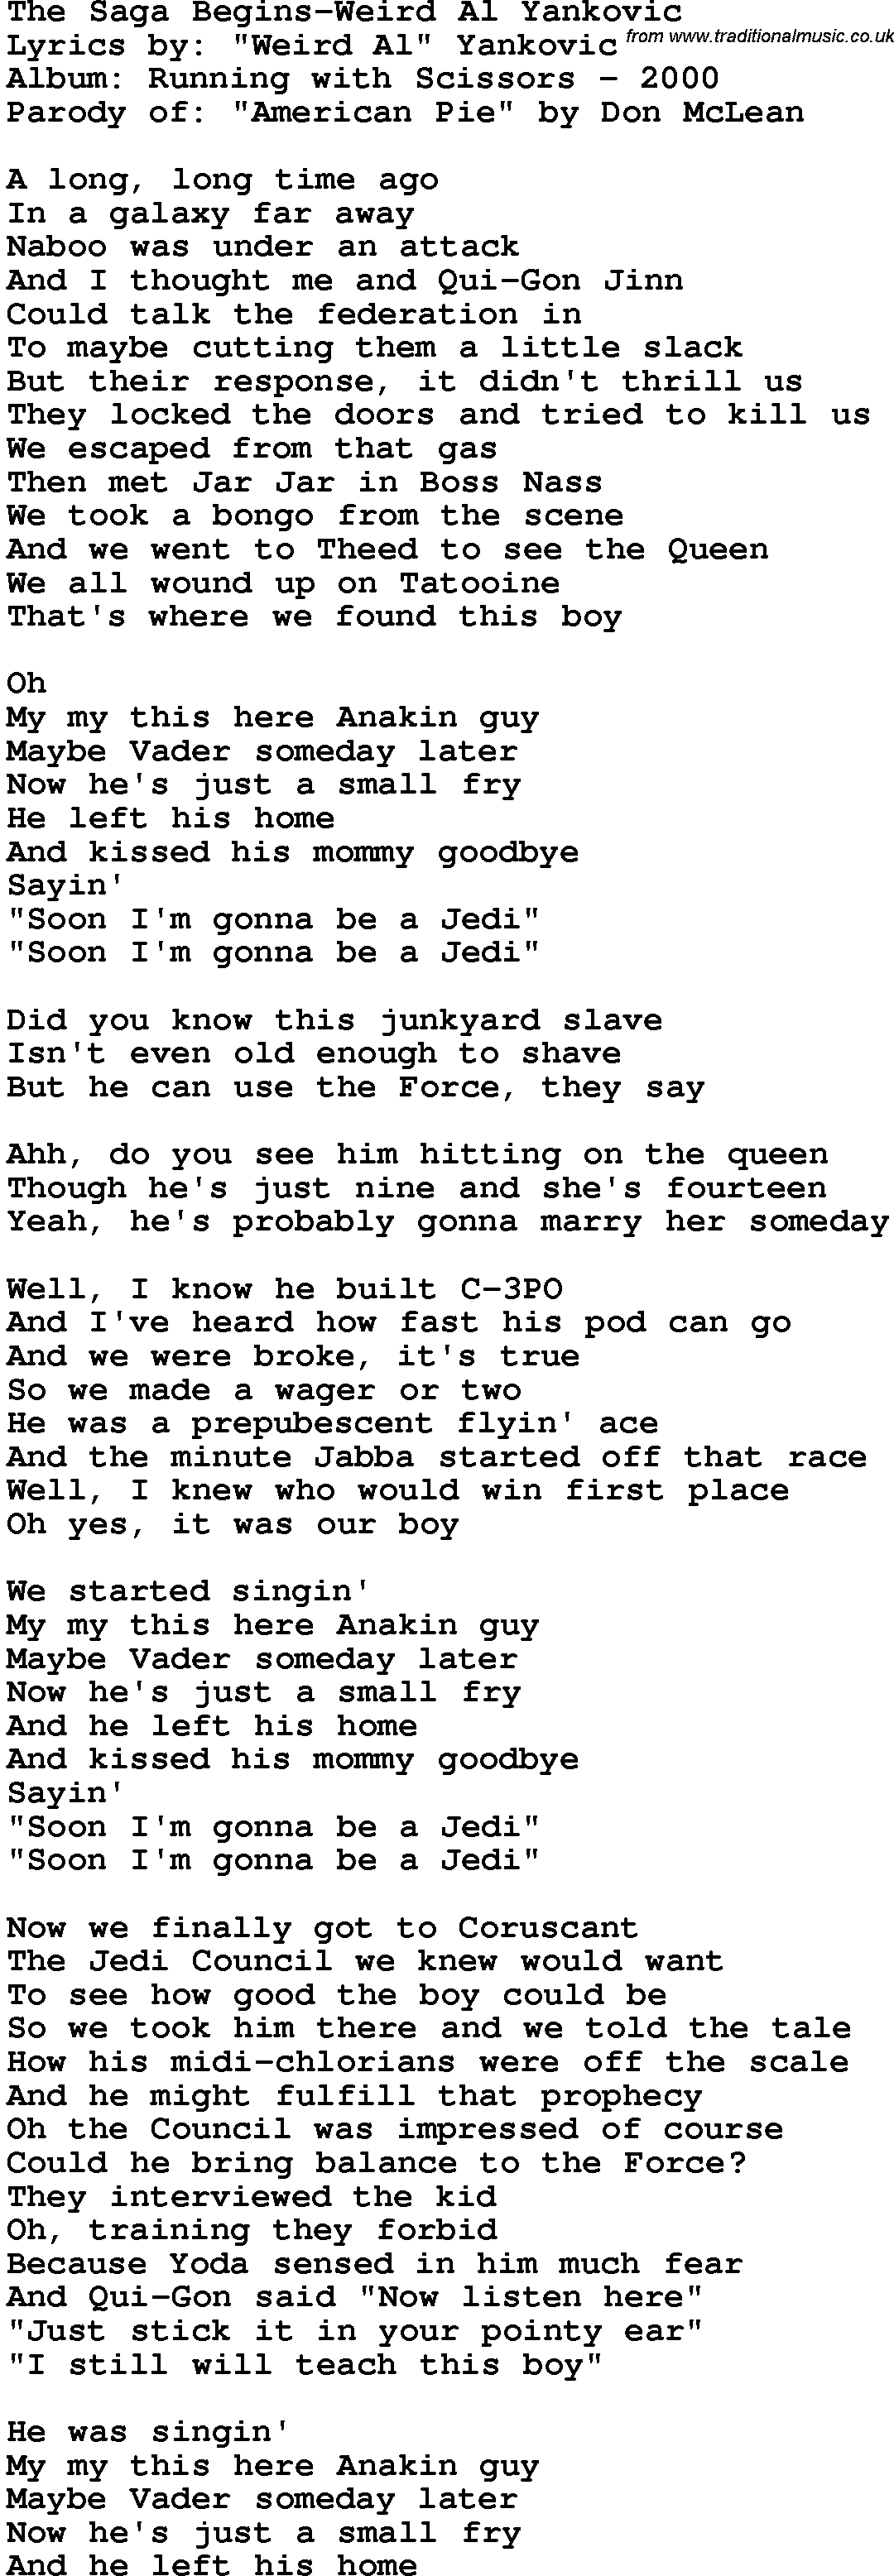 Novelty song: The Saga Begins-Weird Al Yankovic lyrics